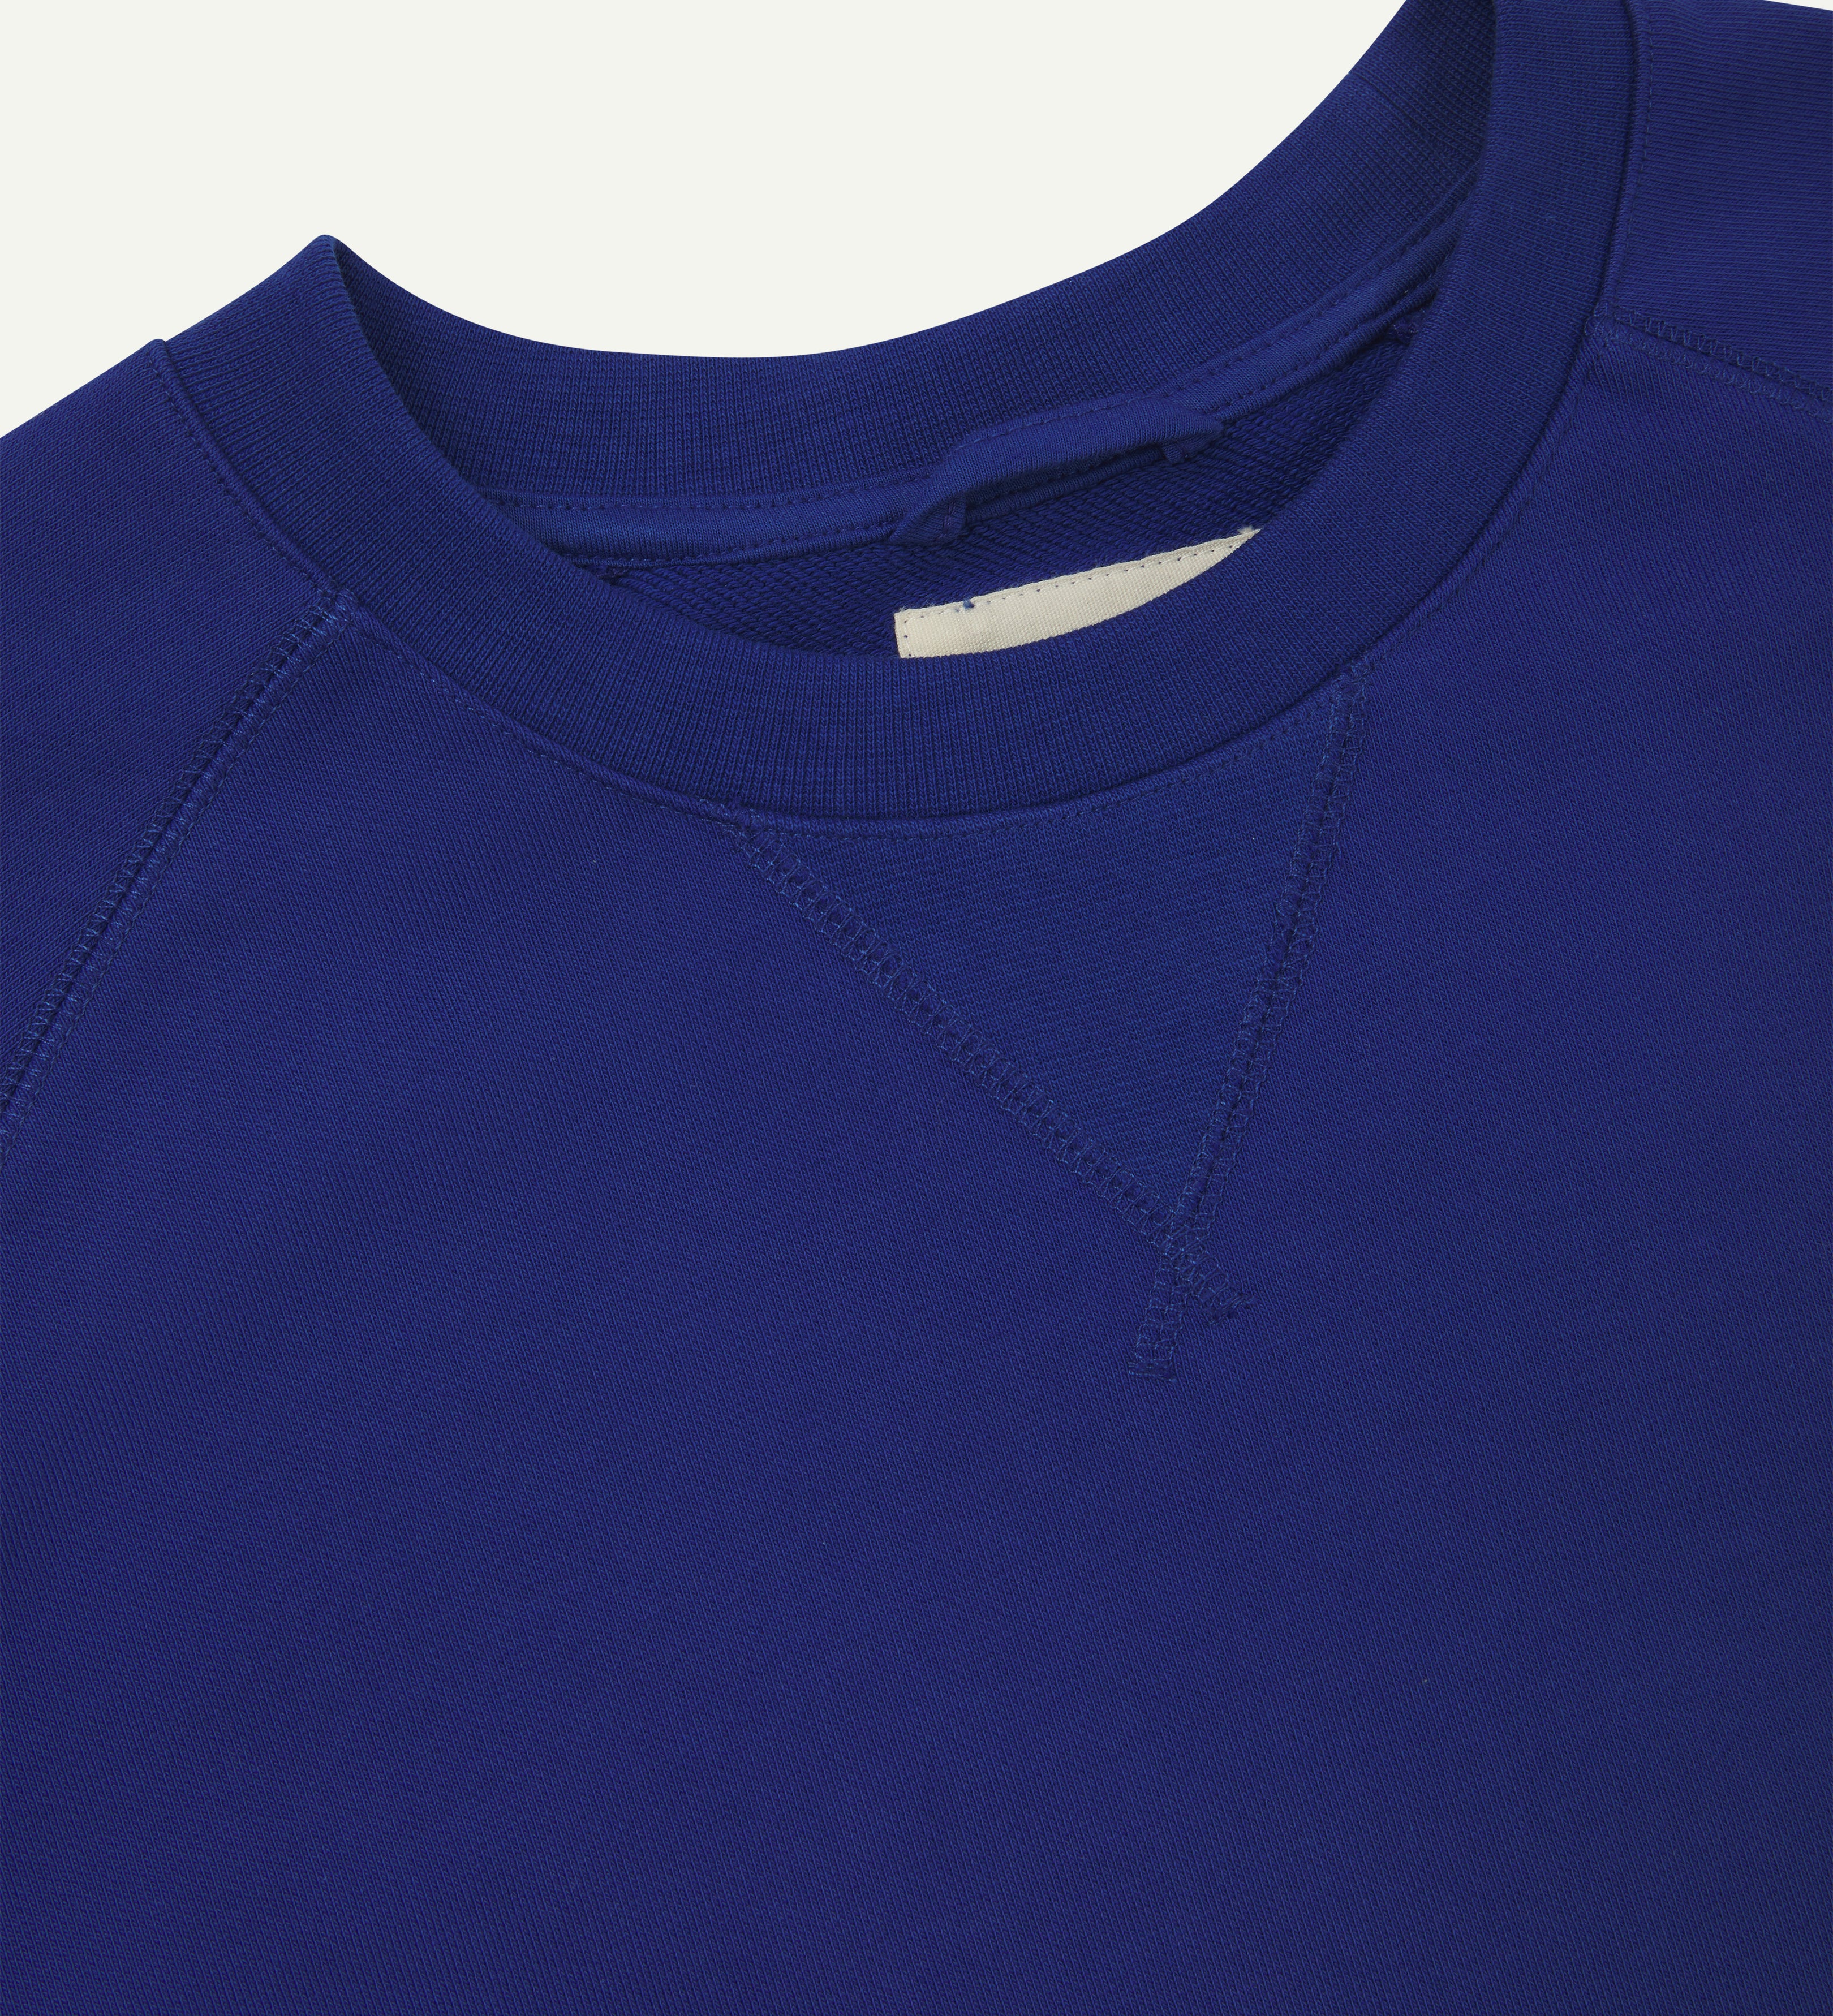 Front view of bright blue men's organic heavyweight cotton #7005 sweatshirt showing collar detail.